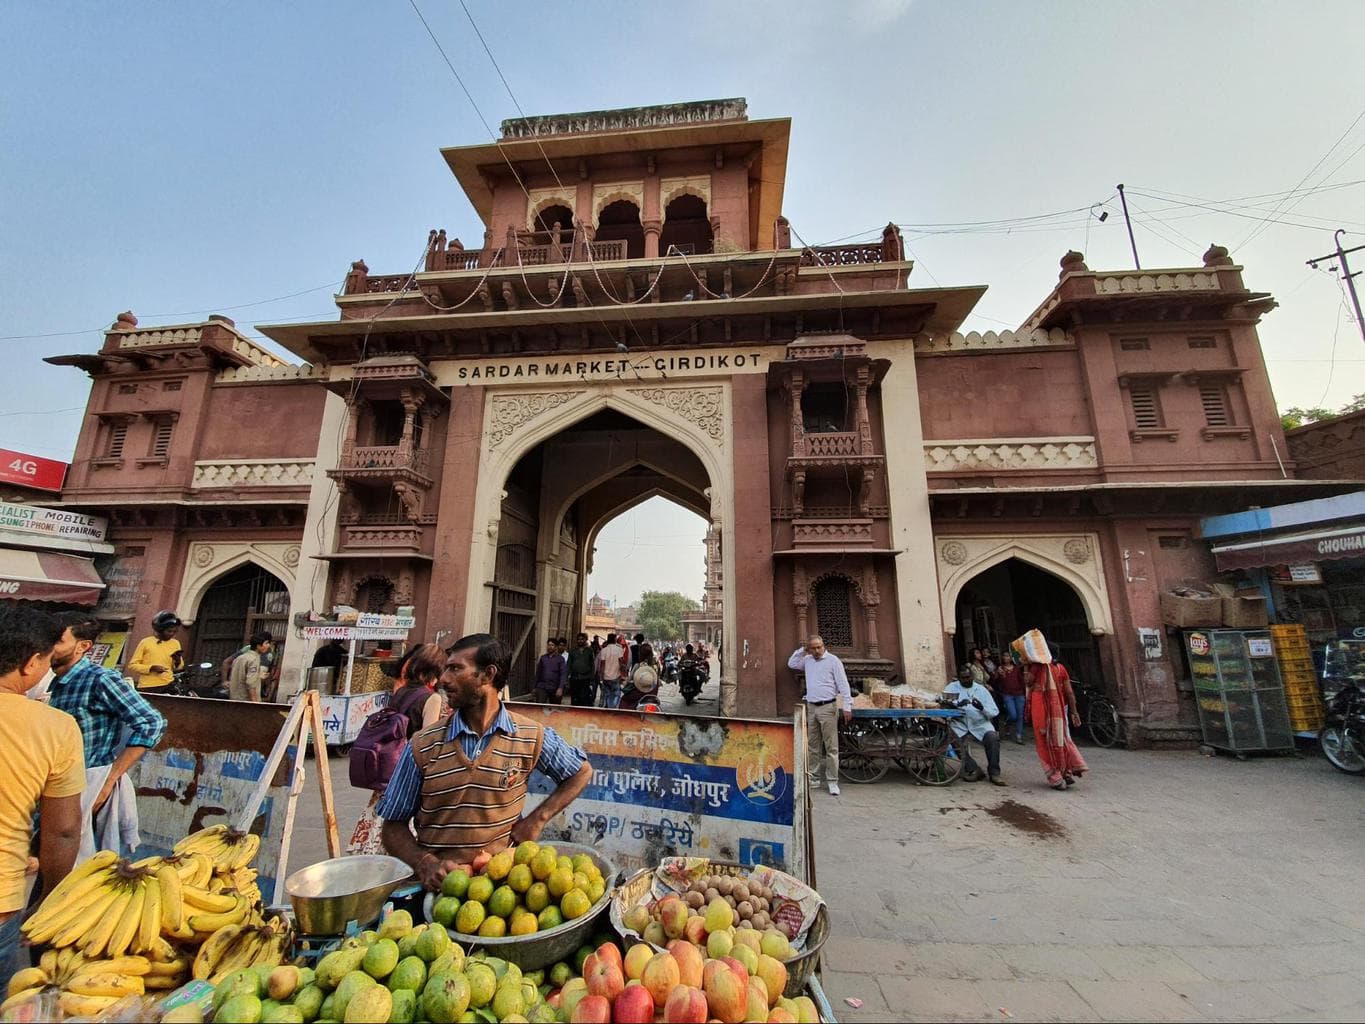 Triple-arched gate to Sardar Market